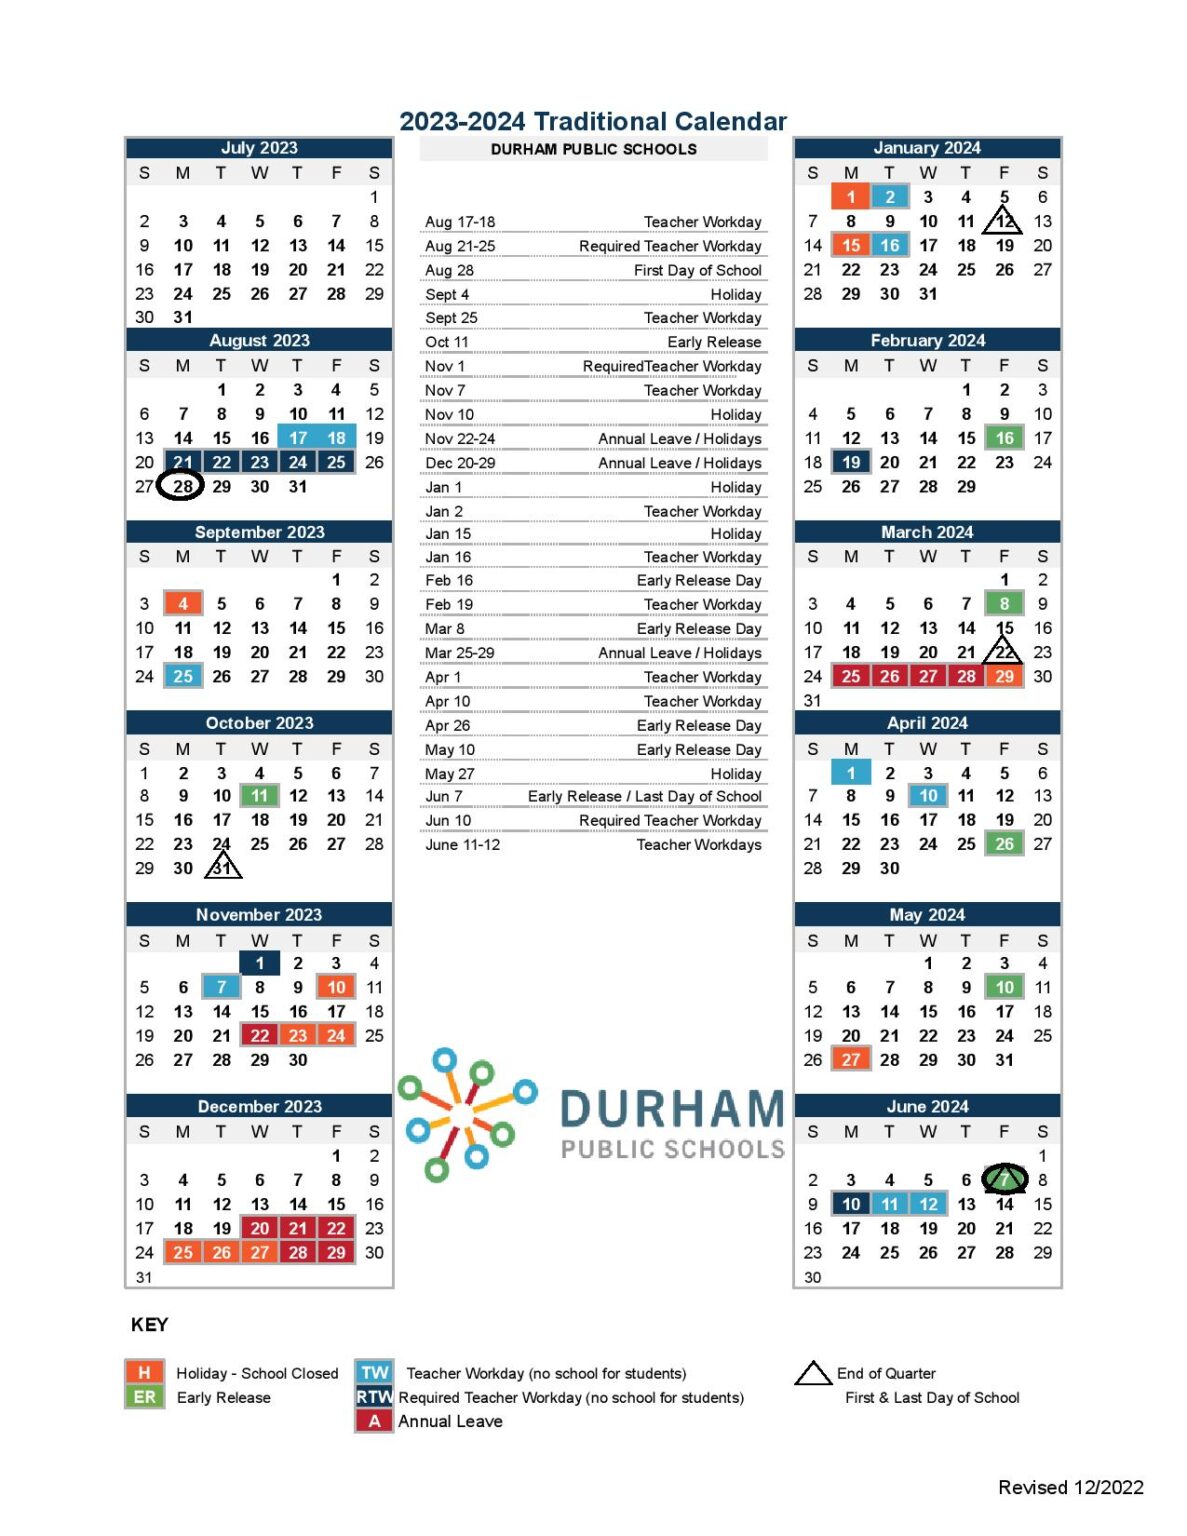 Durham Public Schools Calendar 1187x1536 